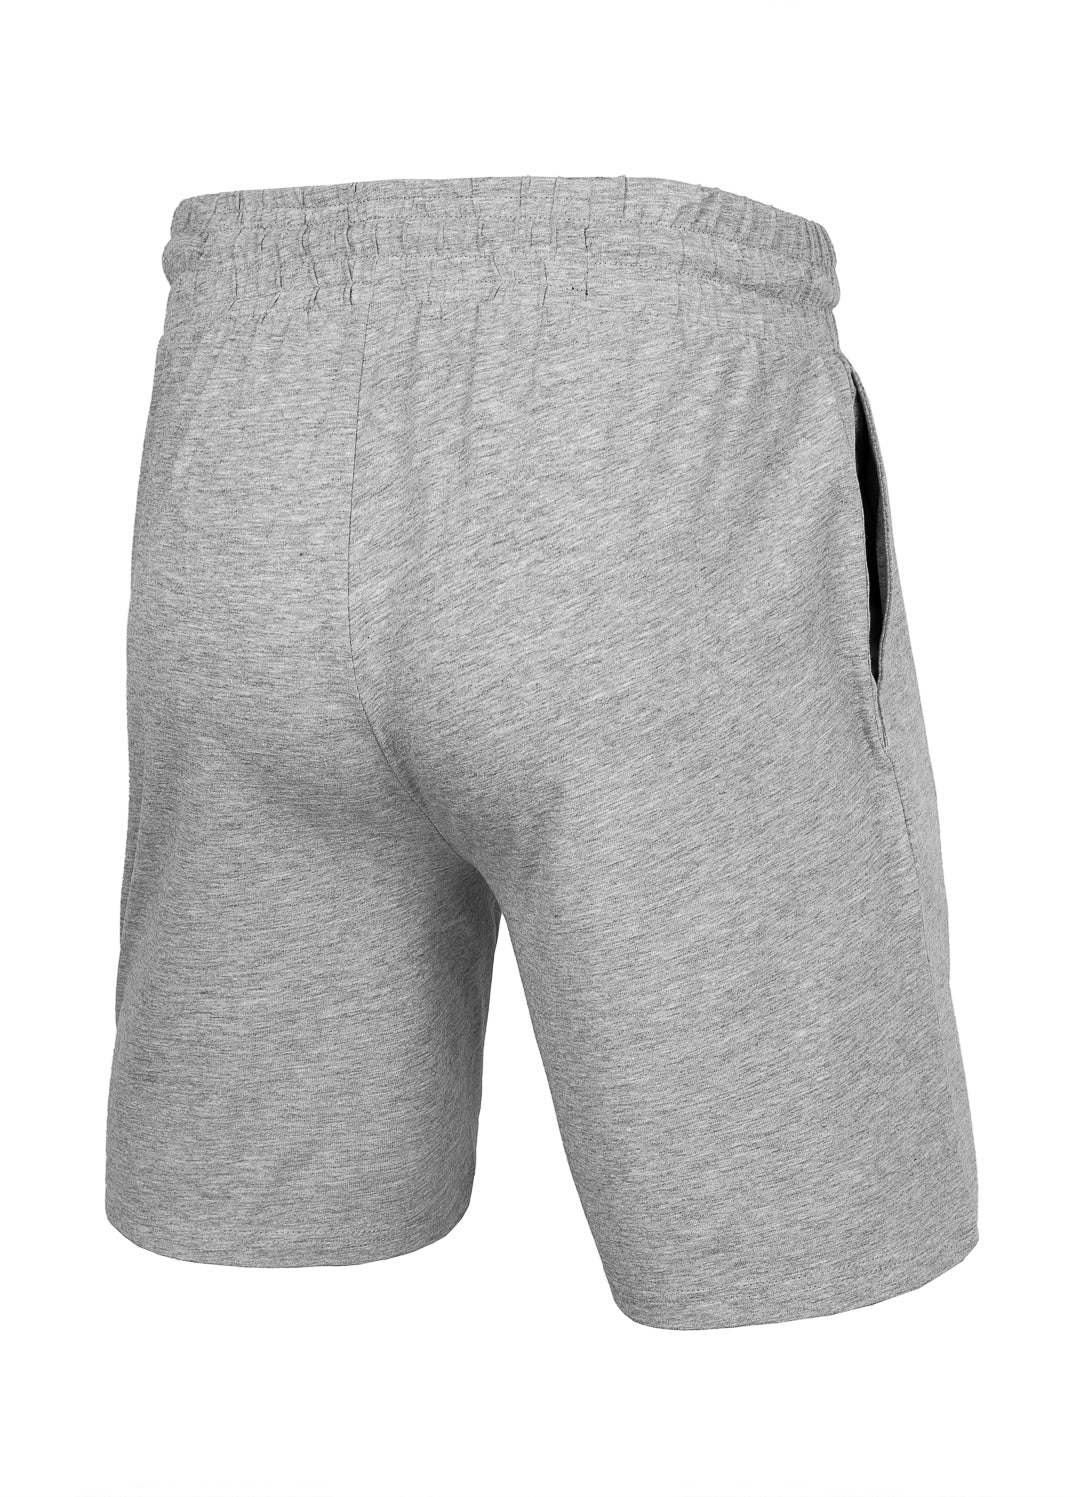 DURANGO Spandex Grey Shorts.